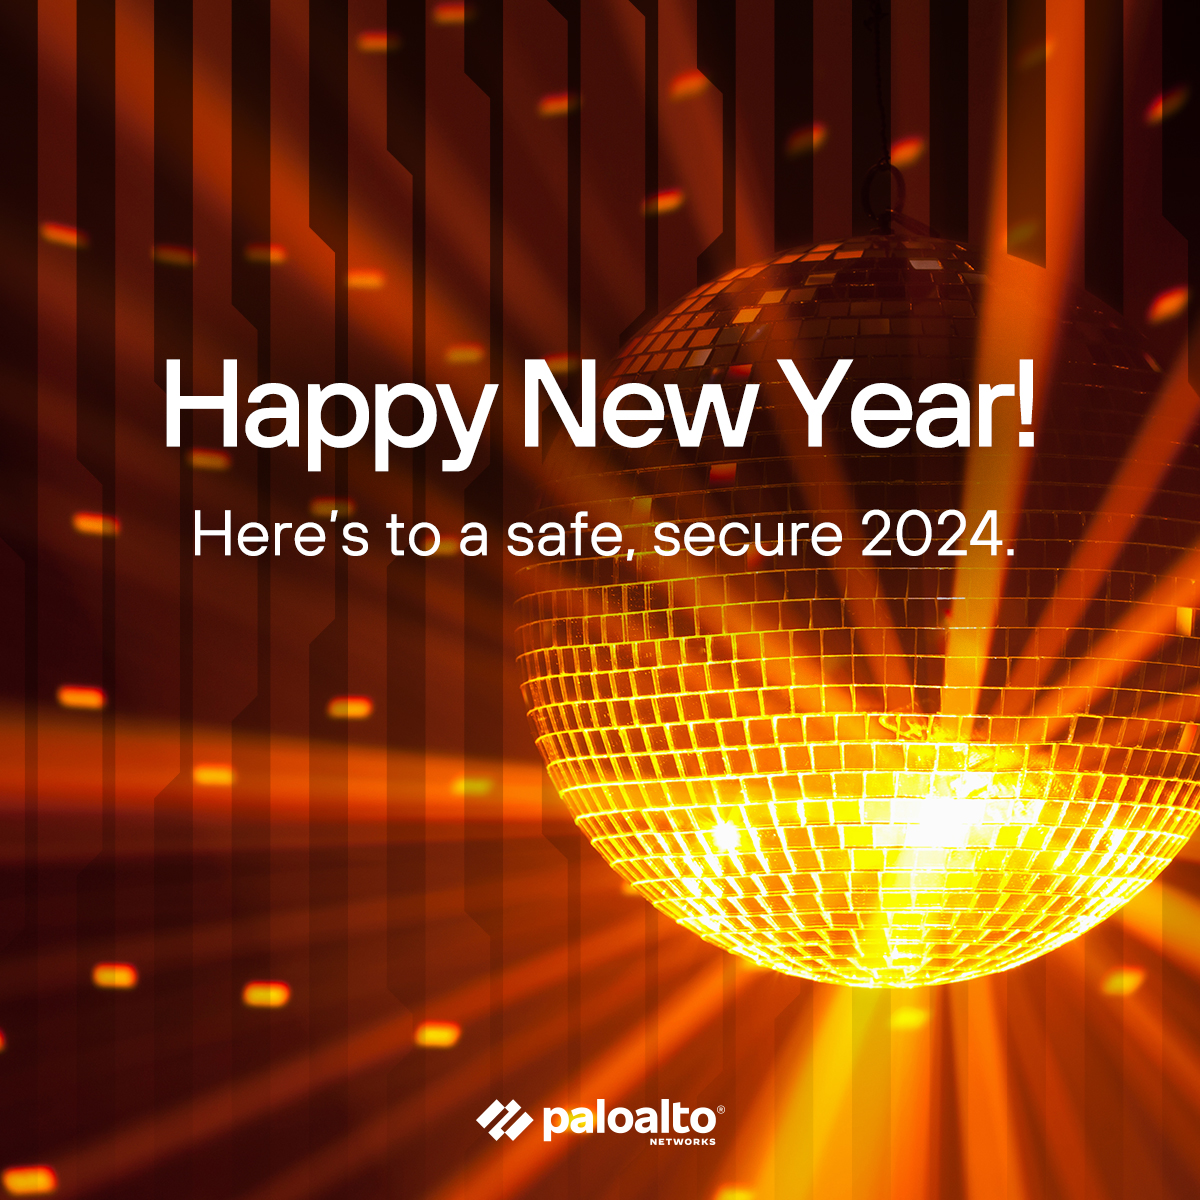 Happy New Year from all of us at @PaloAltoNtwks!